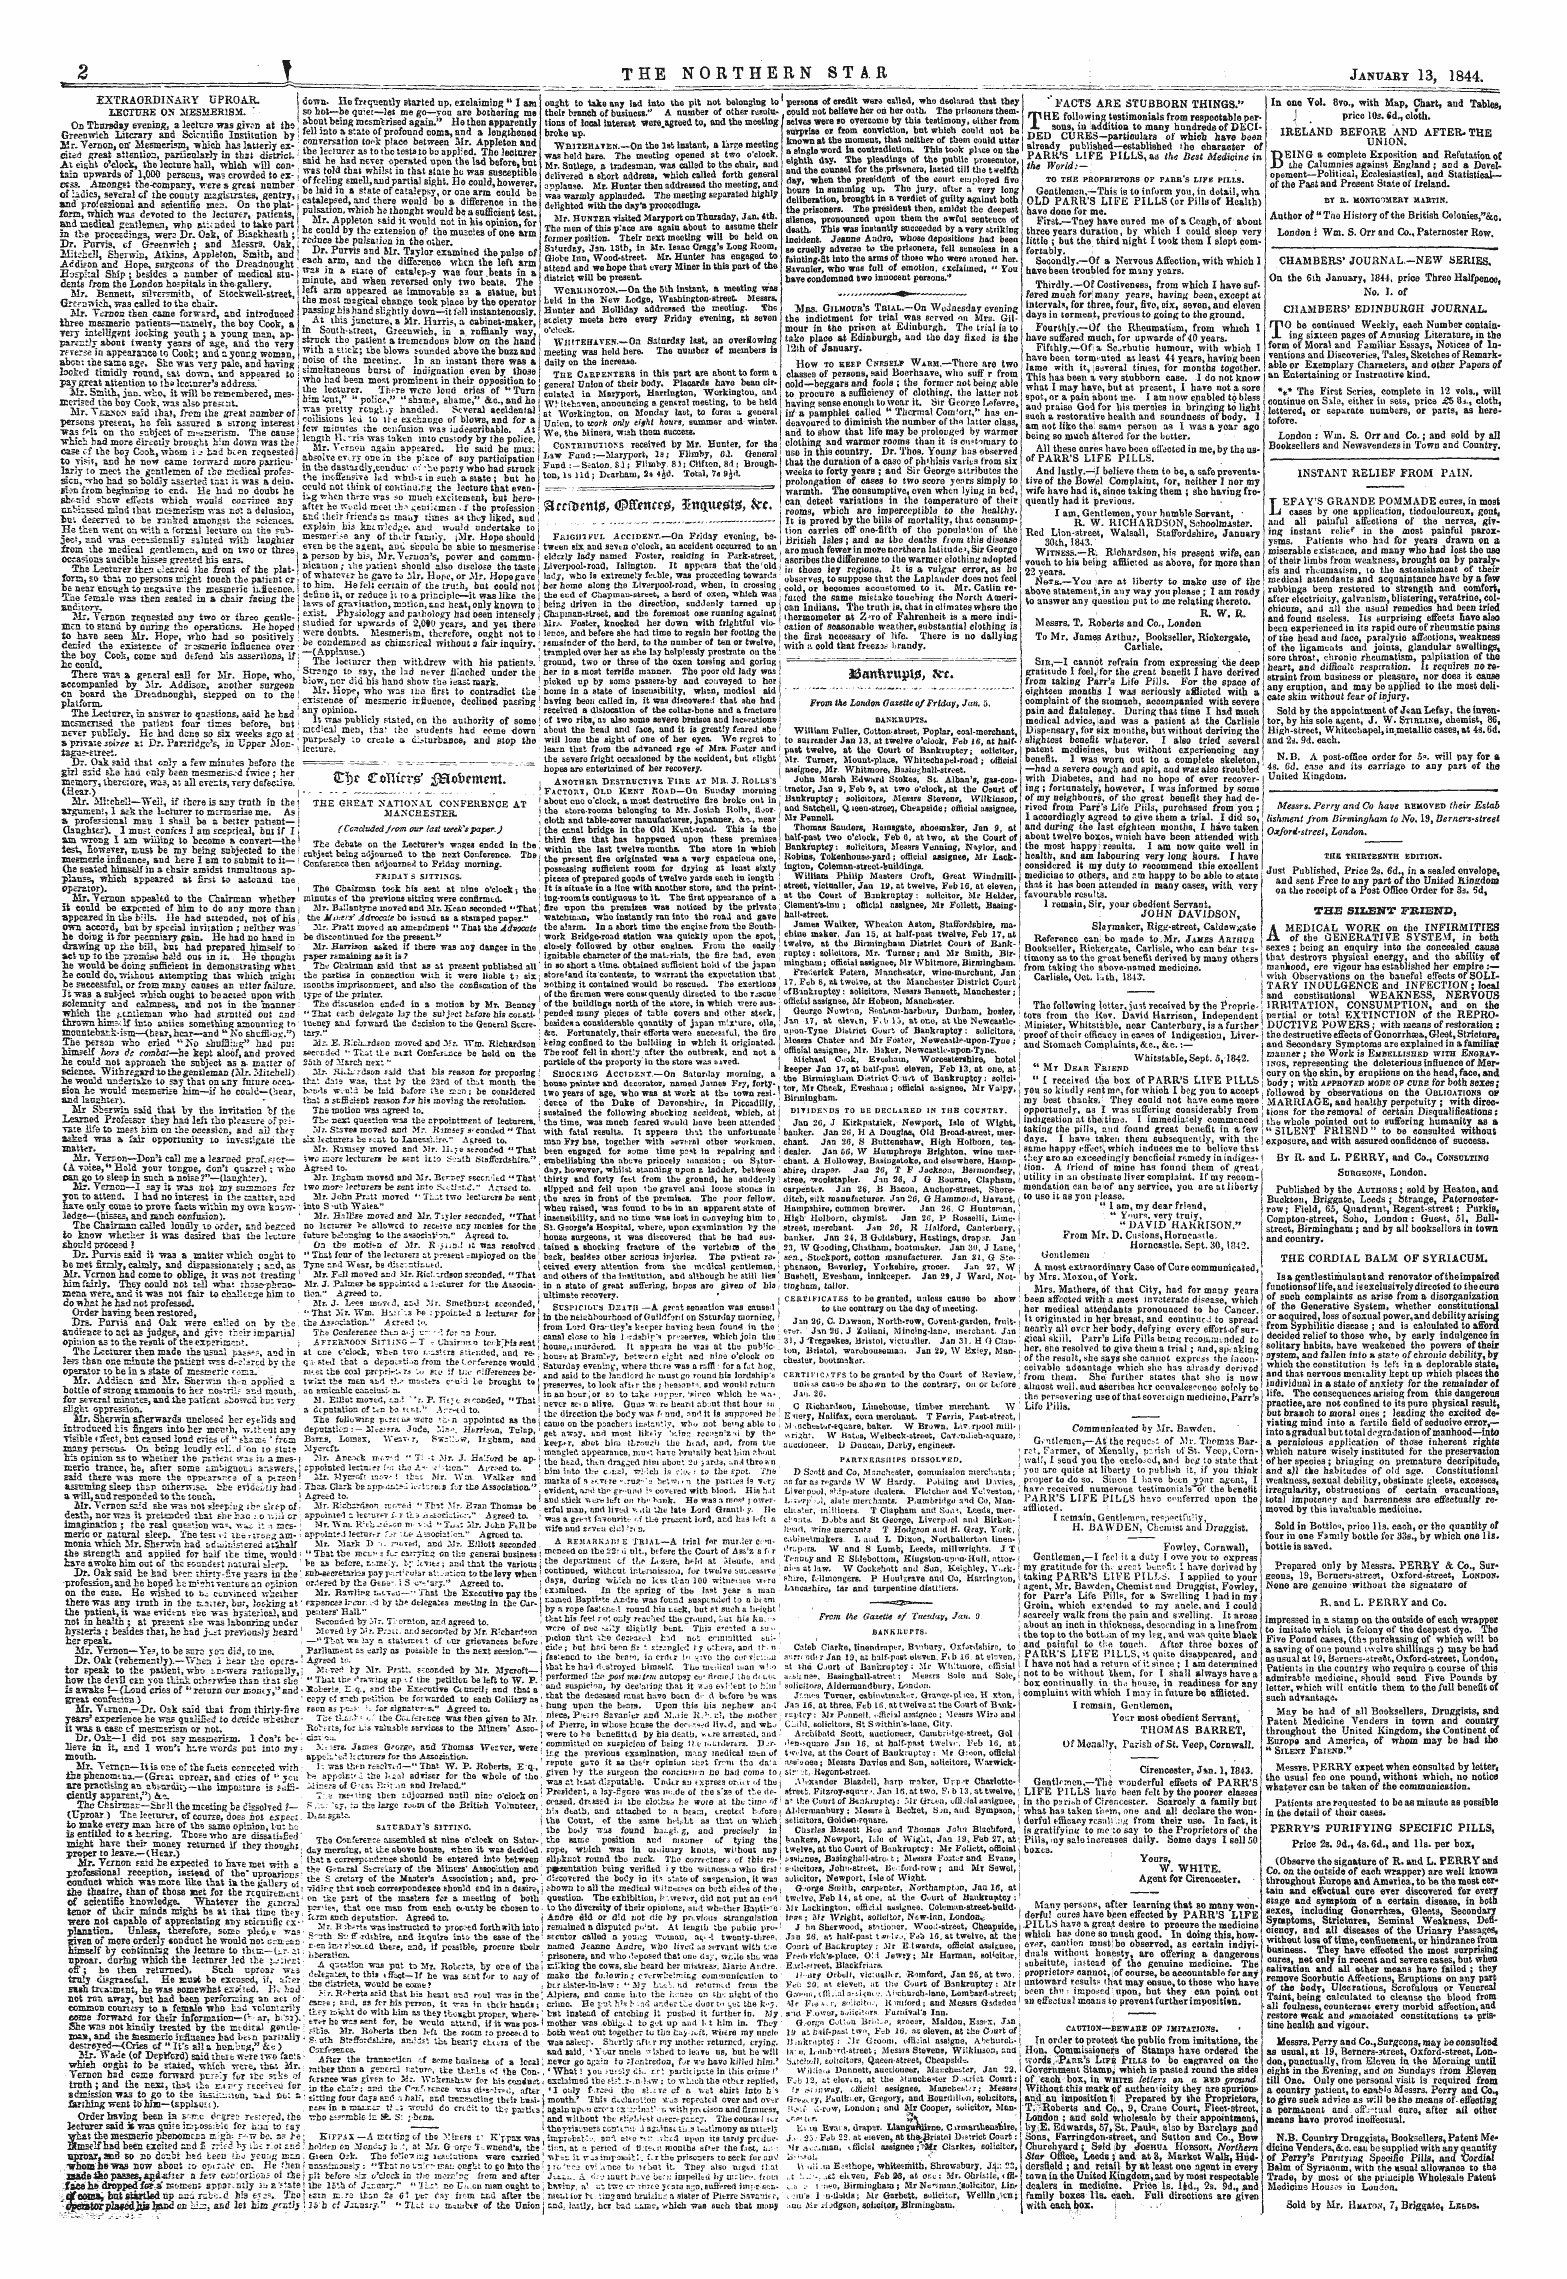 Northern Star (1837-1852): jS F Y, 1st edition - Fd)C Cznkx'g Gglobtment.